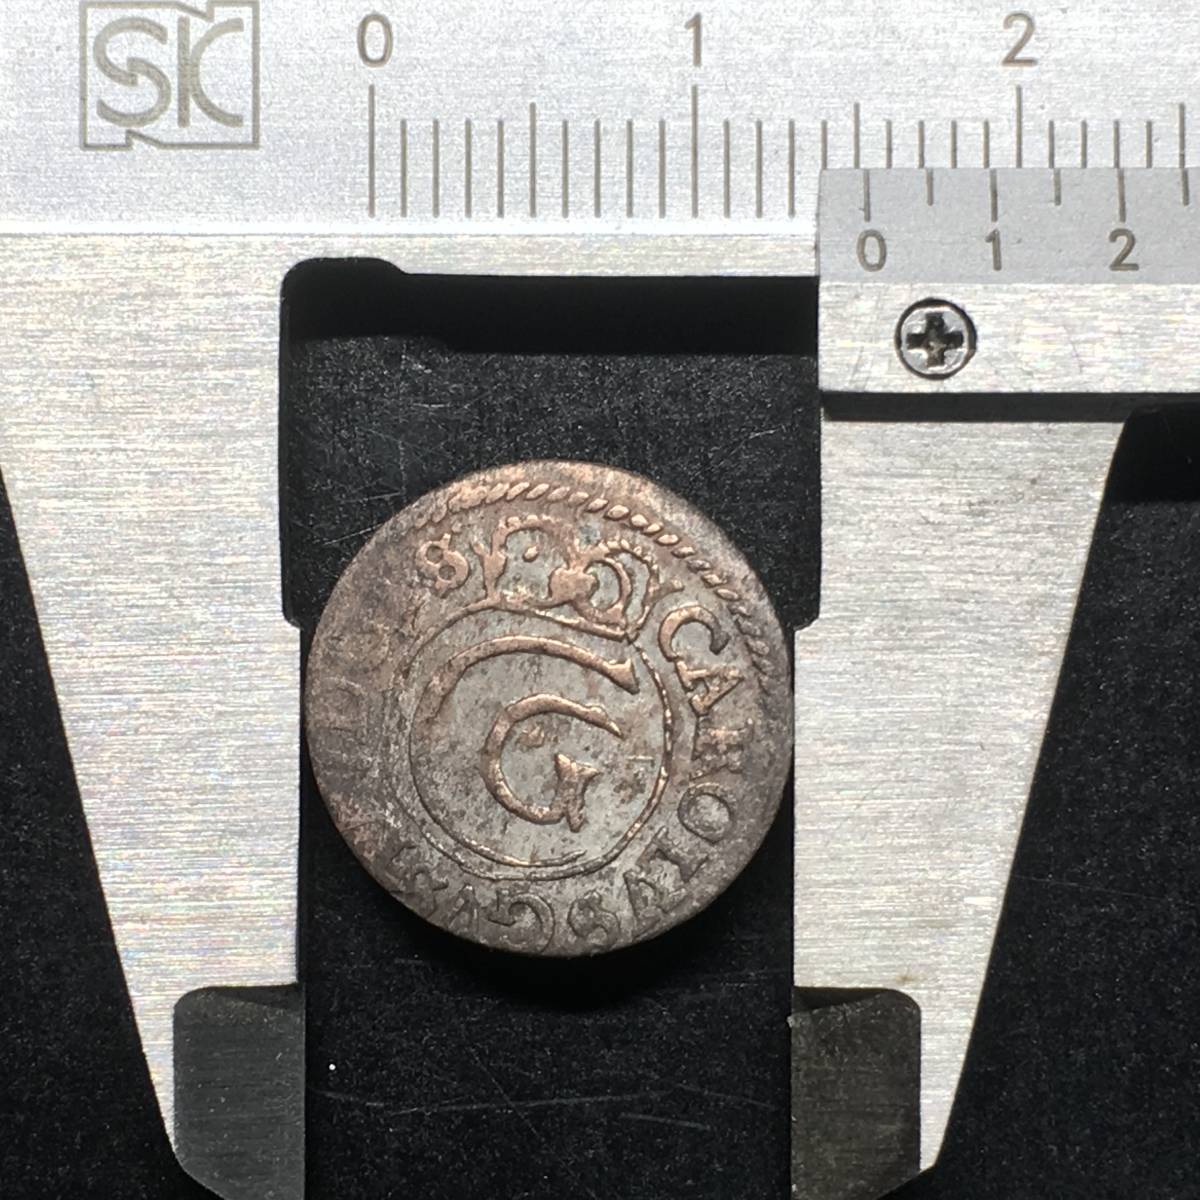 XXX-稀有/中世紀瑞典/比永硬幣** 1654的西甲 - 利沃尼亞/瑞典國王卡爾10 II - 古斯塔夫（在位1654至1660年A.D）** 原文:XXX-レア / 中世スェーデン / Billonコイン**1654’s リーガ-リヴォニア / スェーデン国王 カール 10世-グスタフ (在位1654-1660 A.D)**